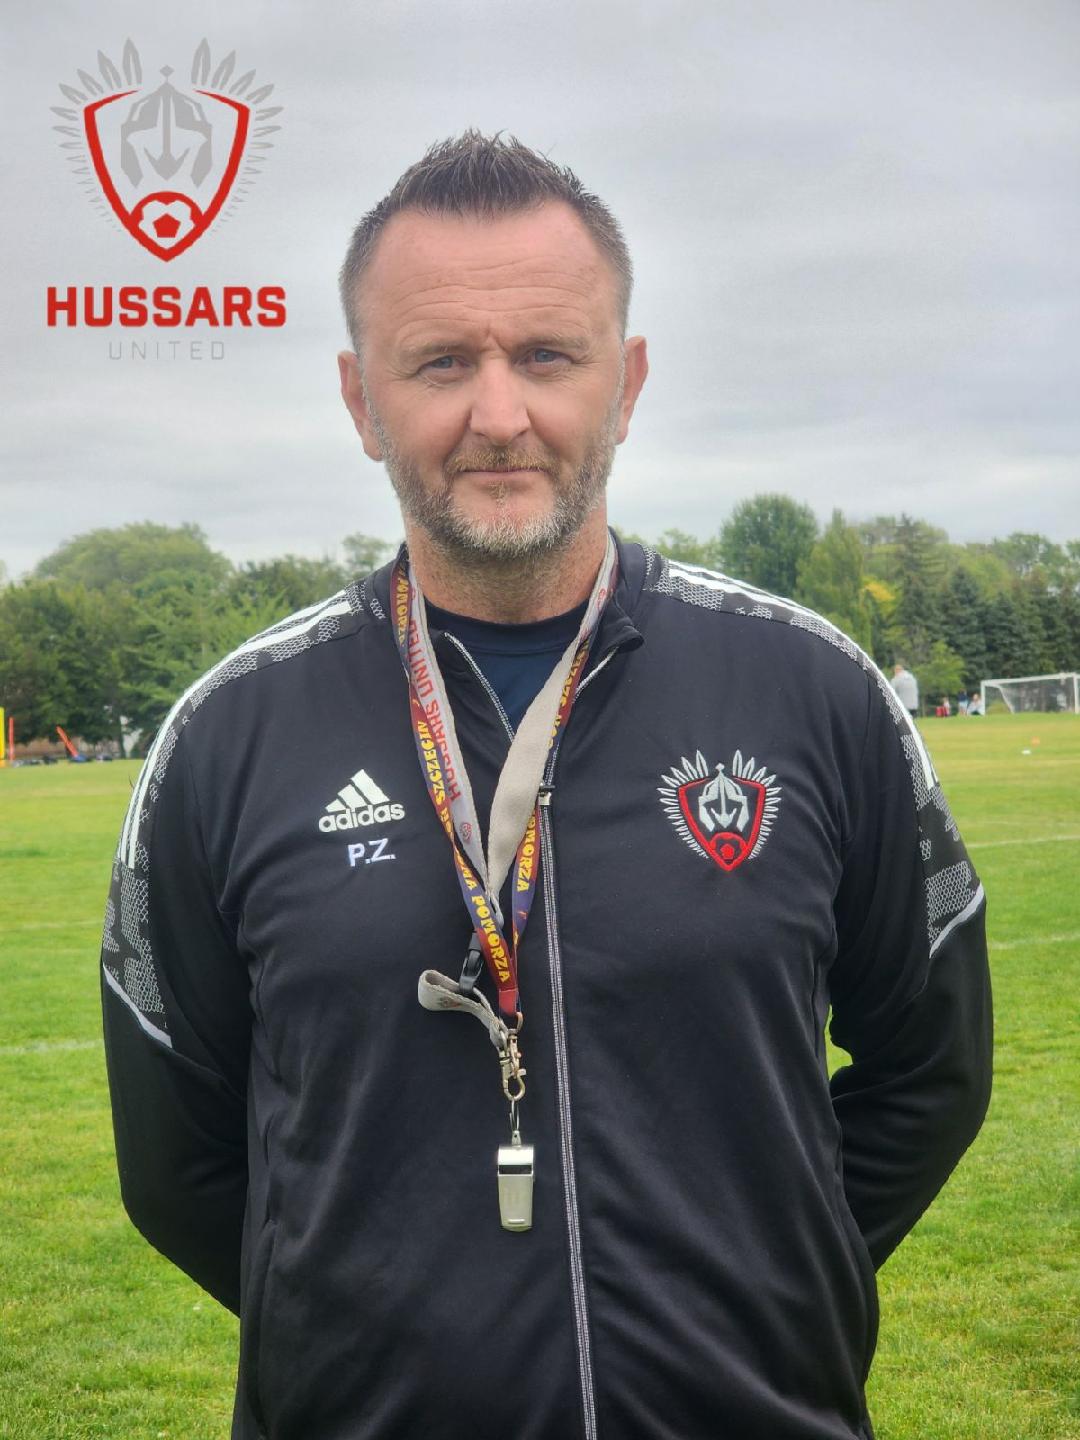 Hussars United Coach Przemek